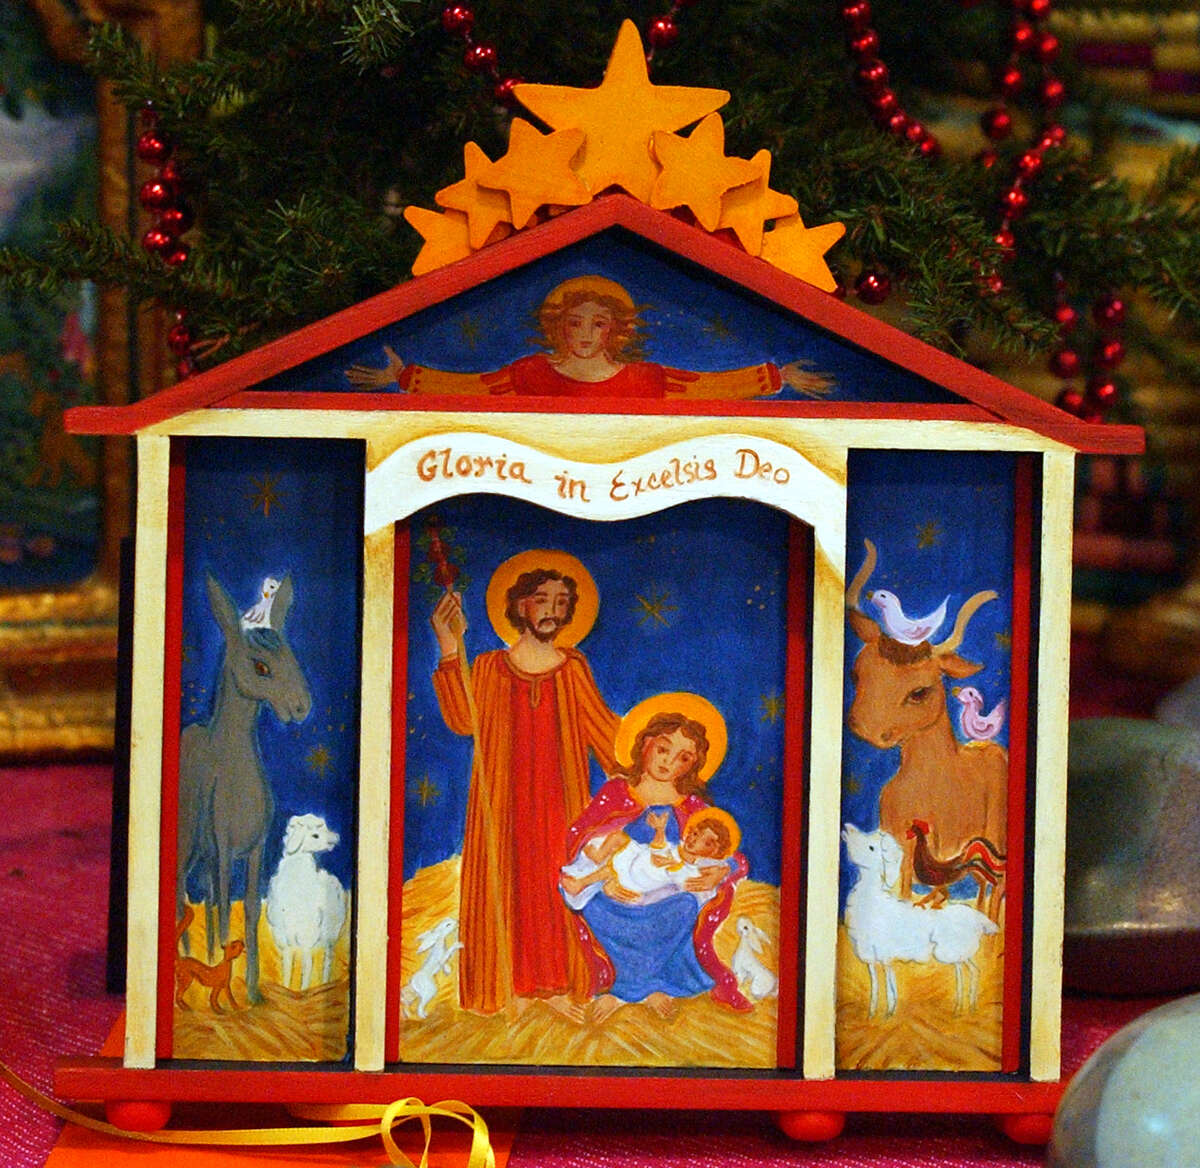 METRO Various Nativity sets from around the world for sale at Viva BookstoreTuesday, December 17, 2002. GLORIA FERNIZ/STAFF